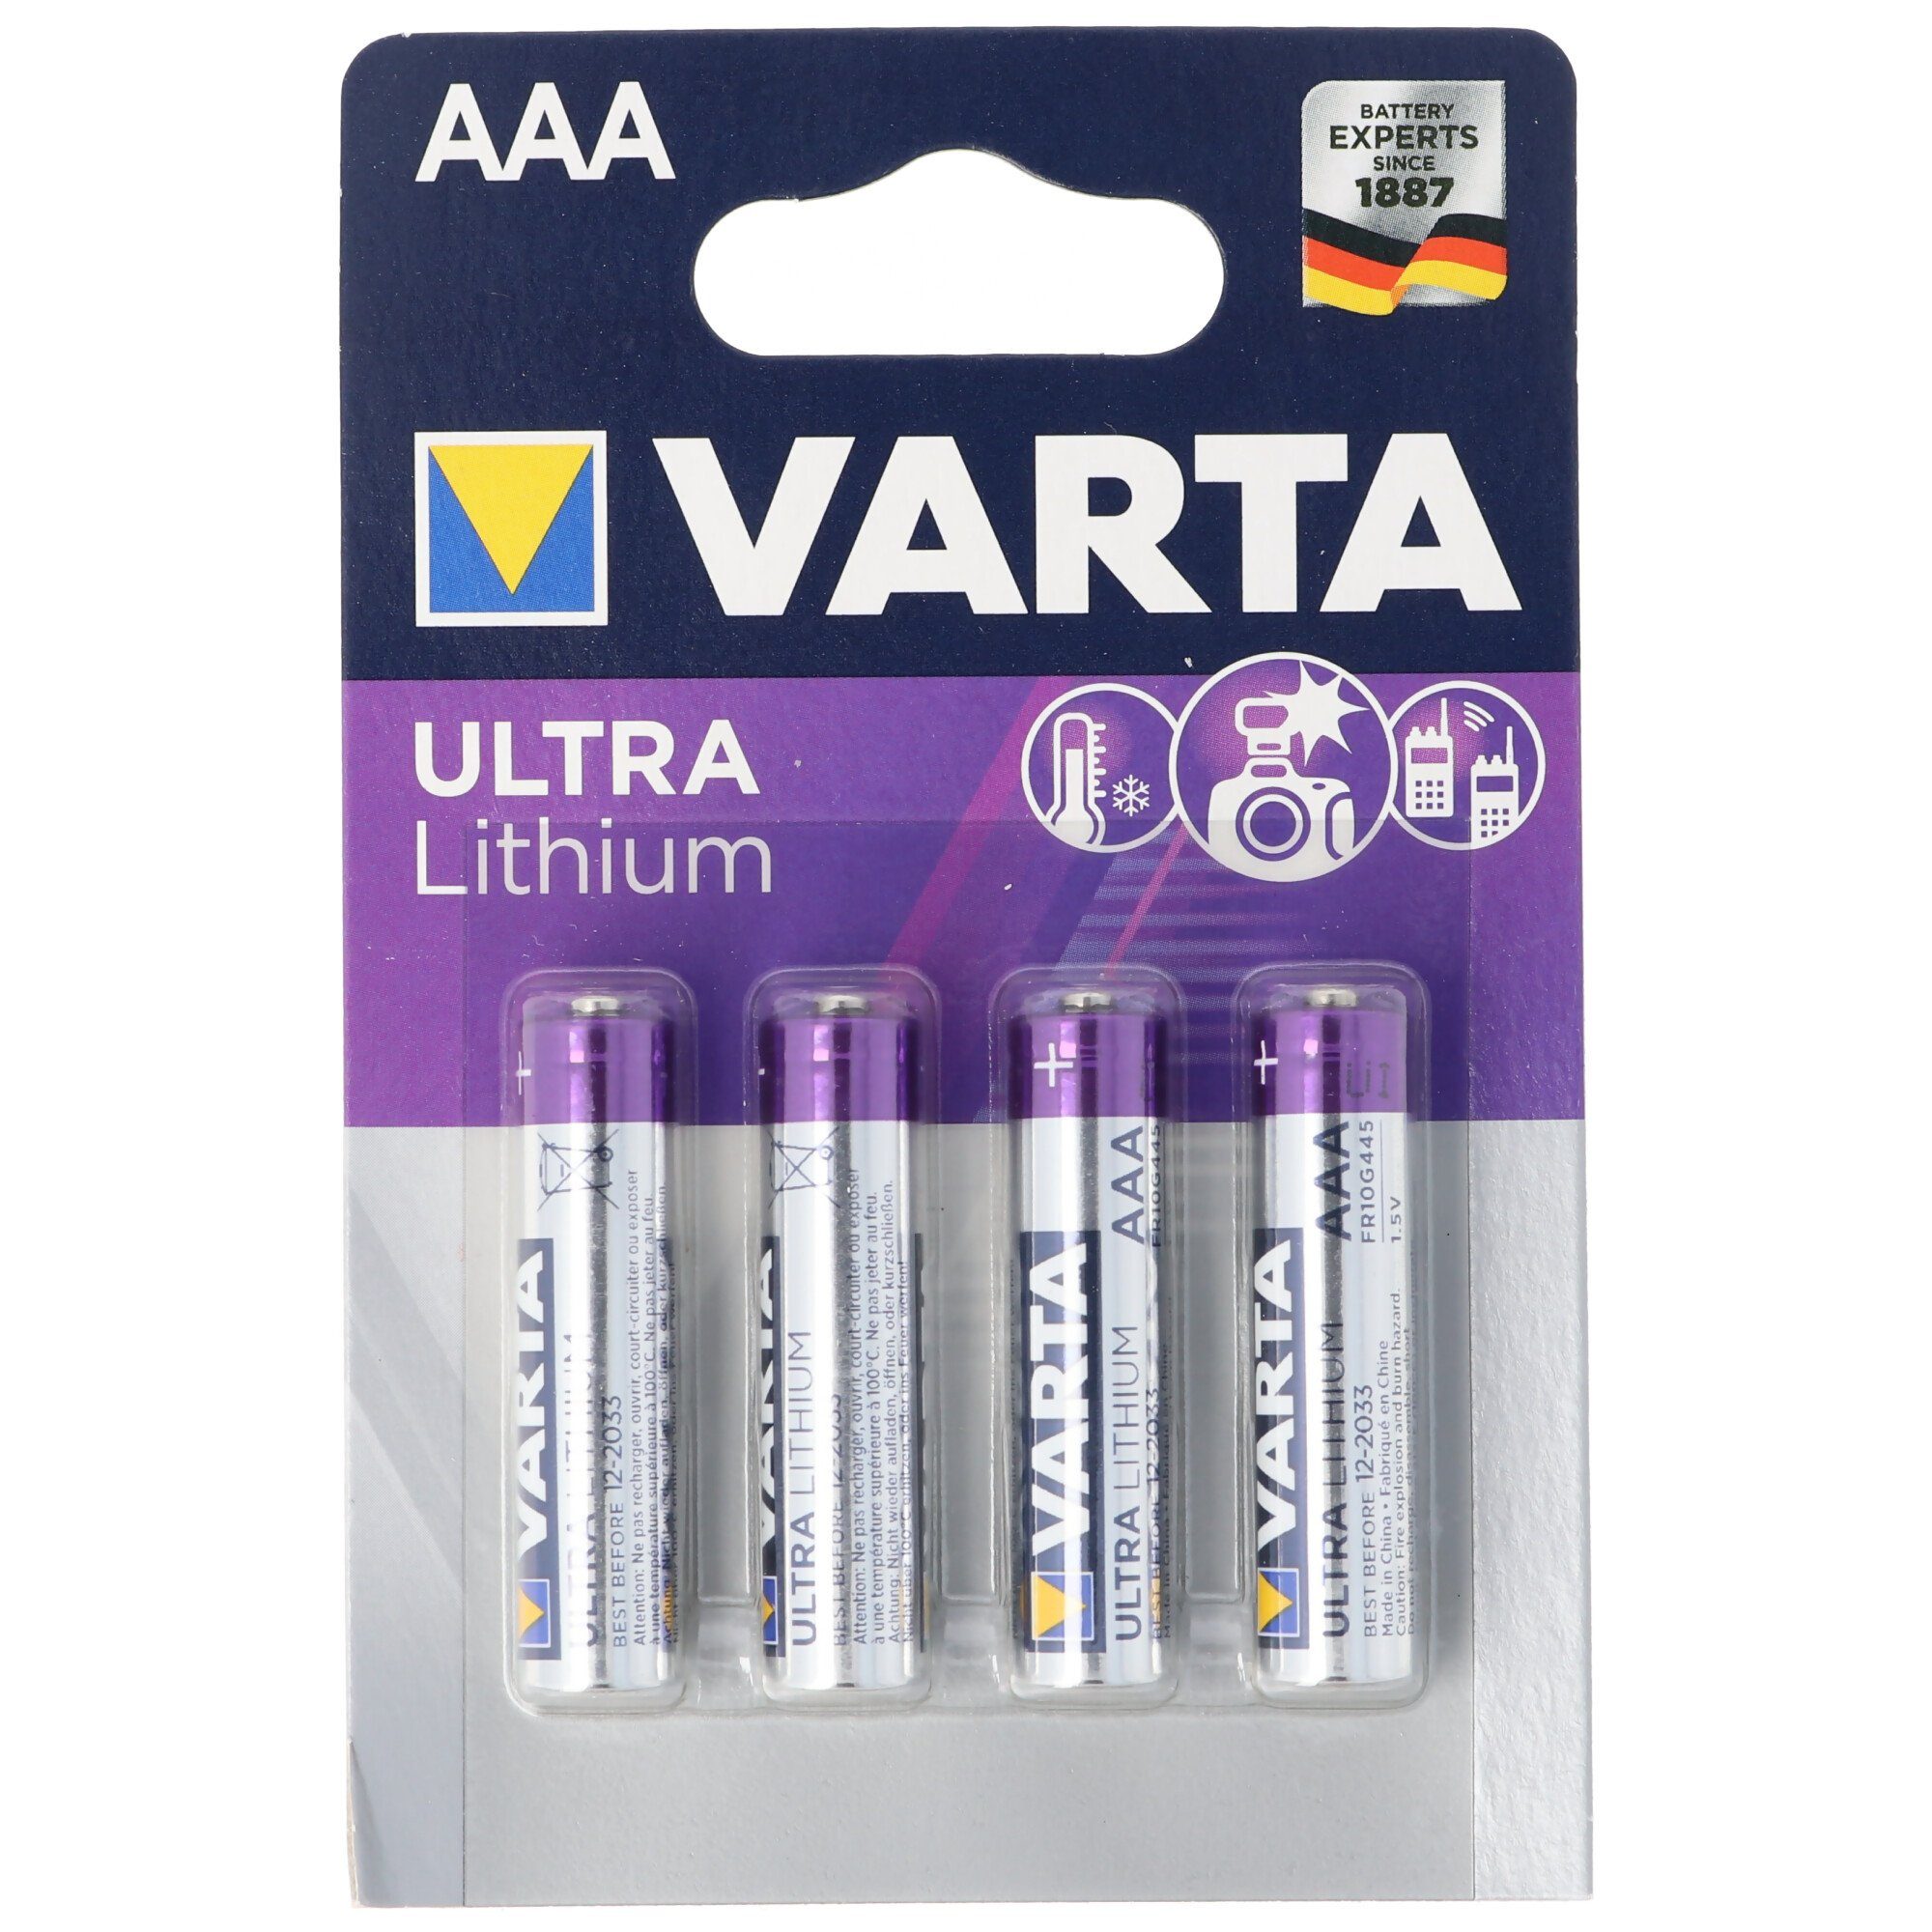 VARTA Varta Lithium Batterie AAA, Micro, FR03, 6103, Varta Ultra Lithium, 1 Batterie